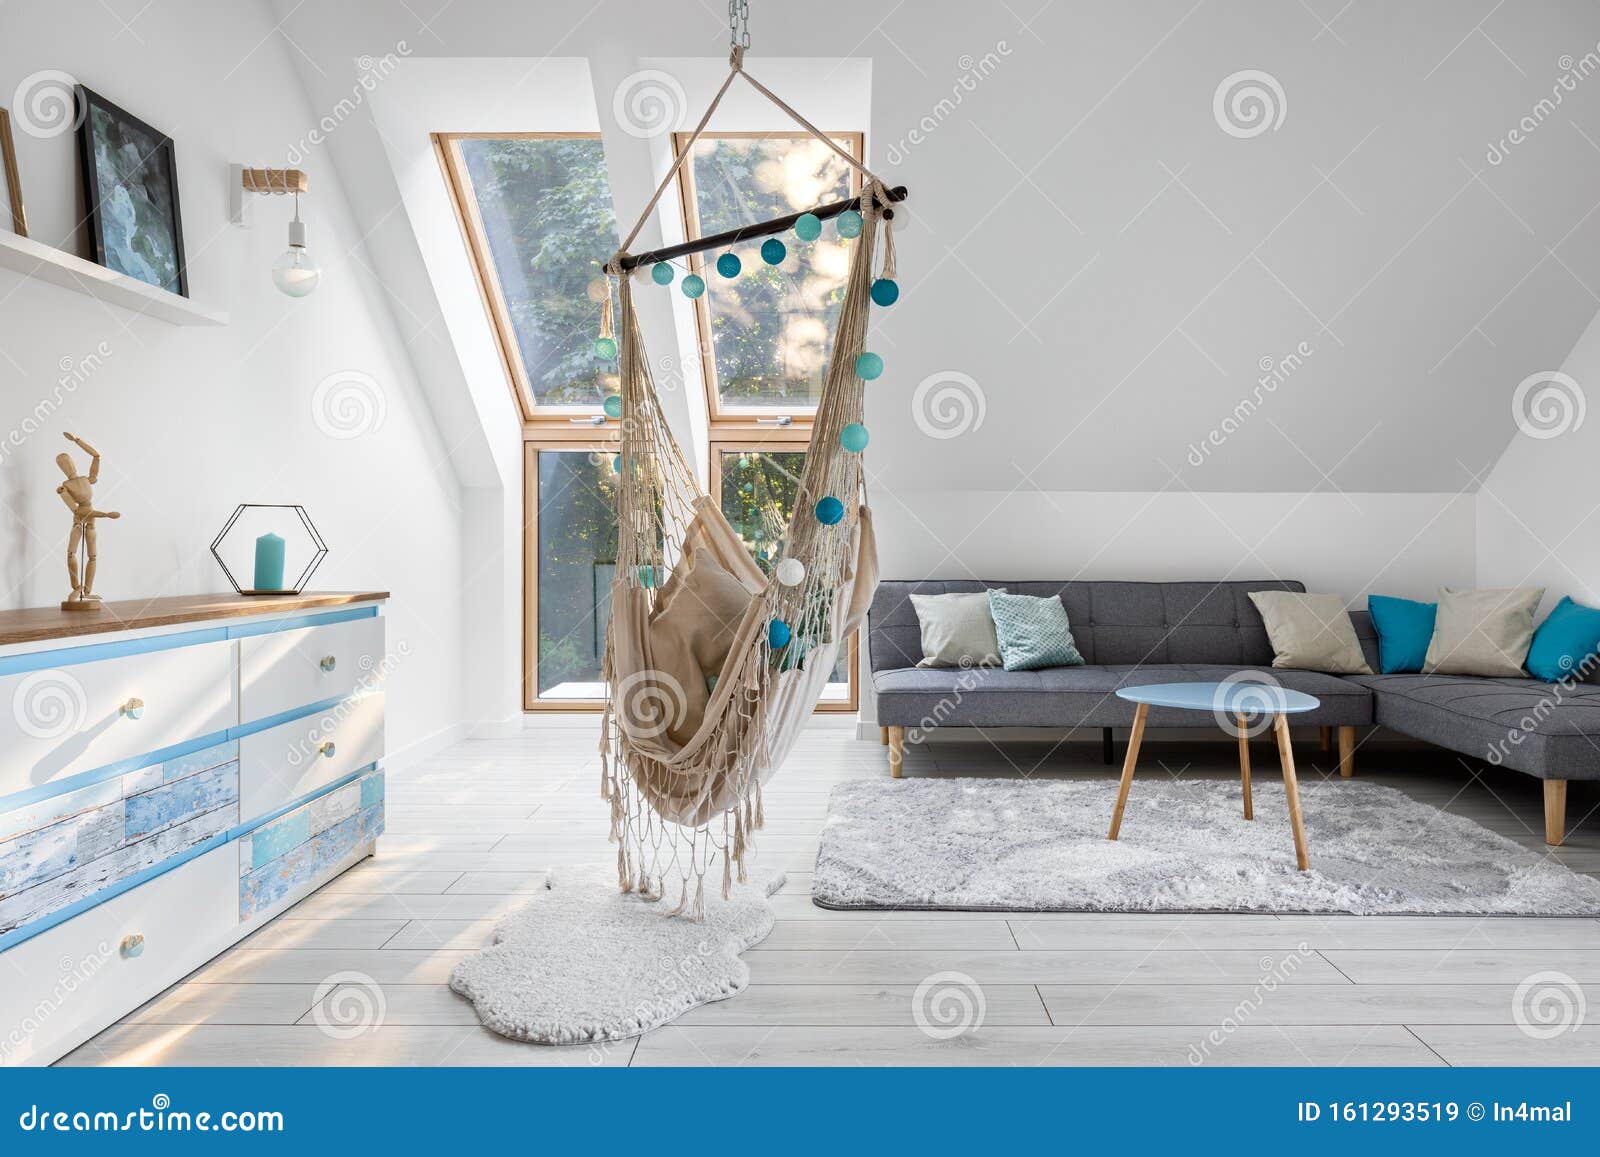 Attic Room With Hammock Seat Stock Image Image Of Floor Dresser